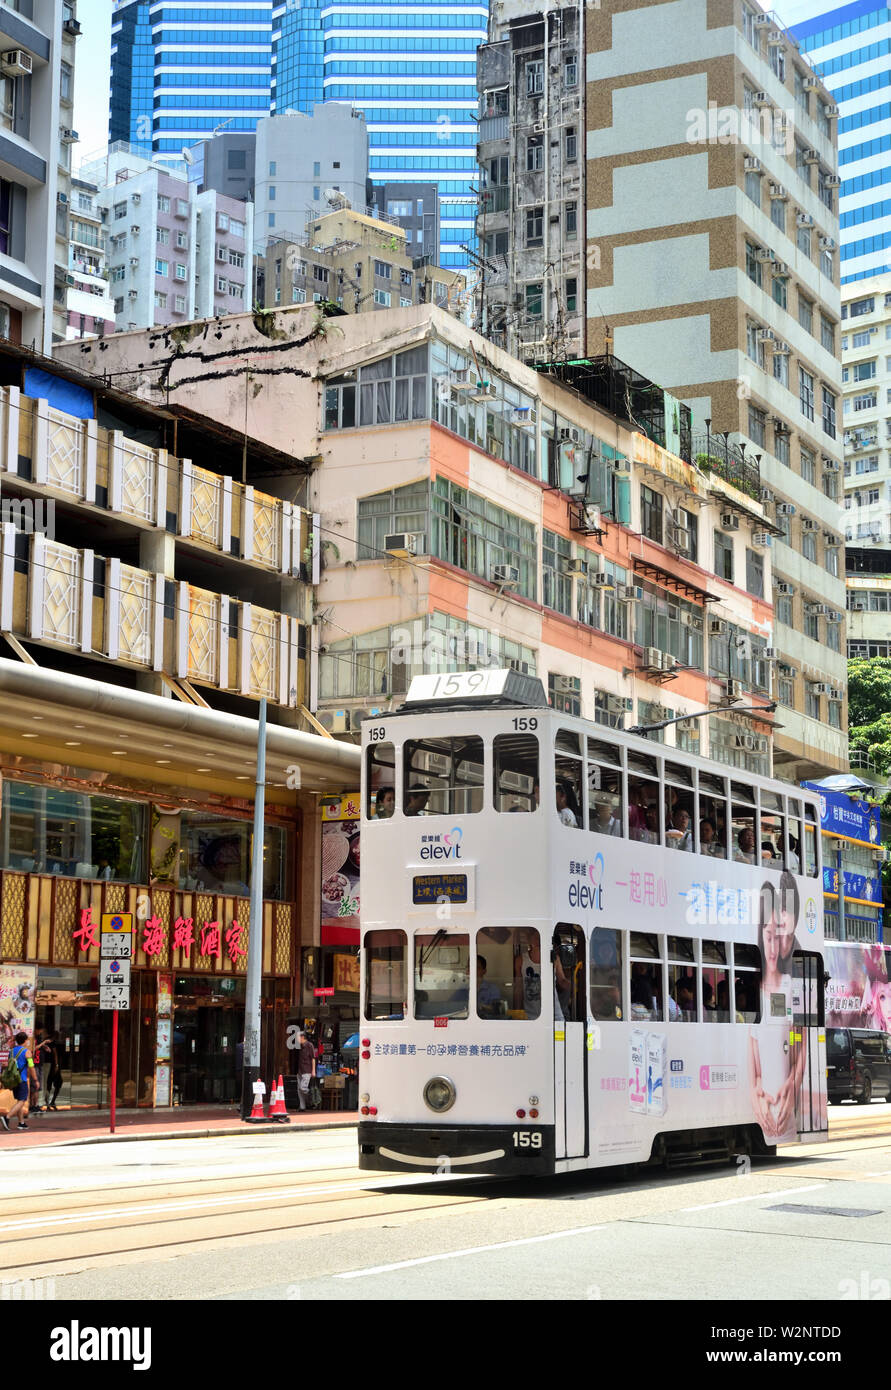 Tram running pass old buildings, Hong Kong Stock Photo